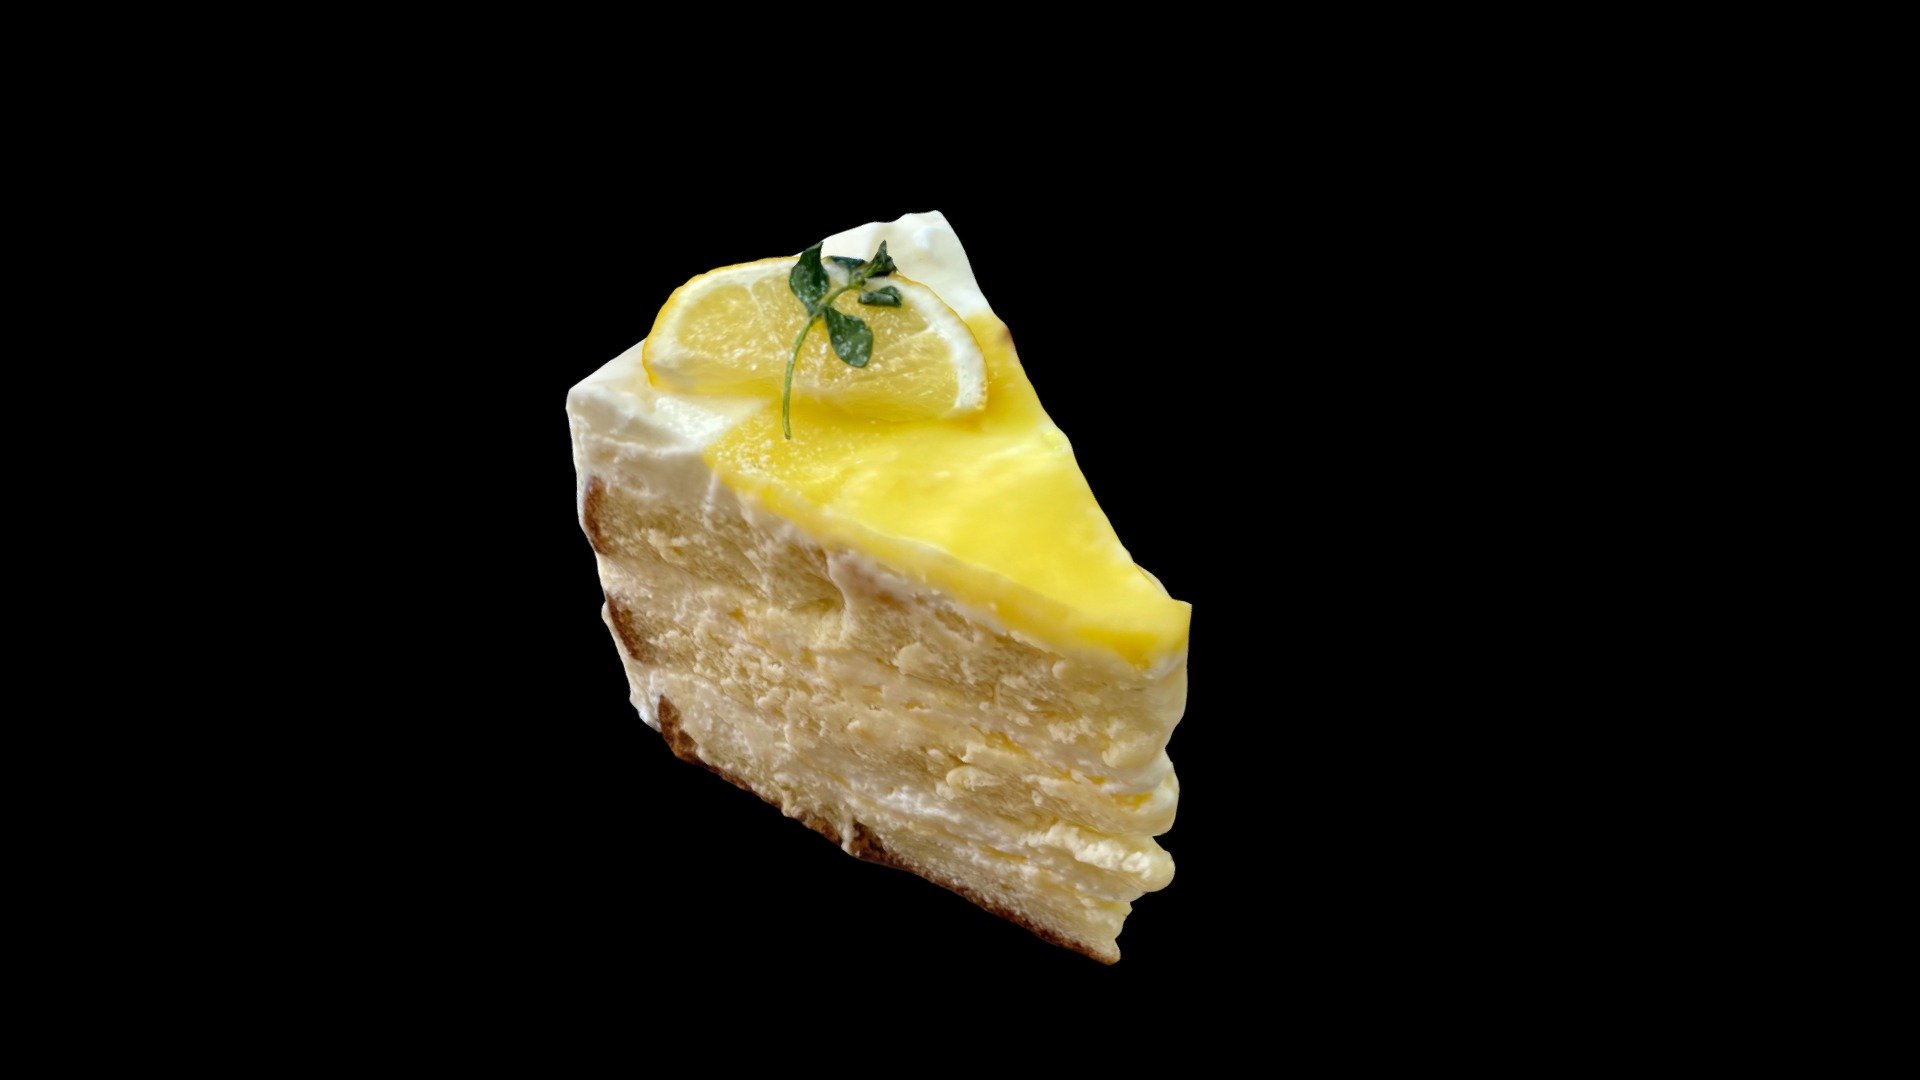 &ldquo;Lemon Cake